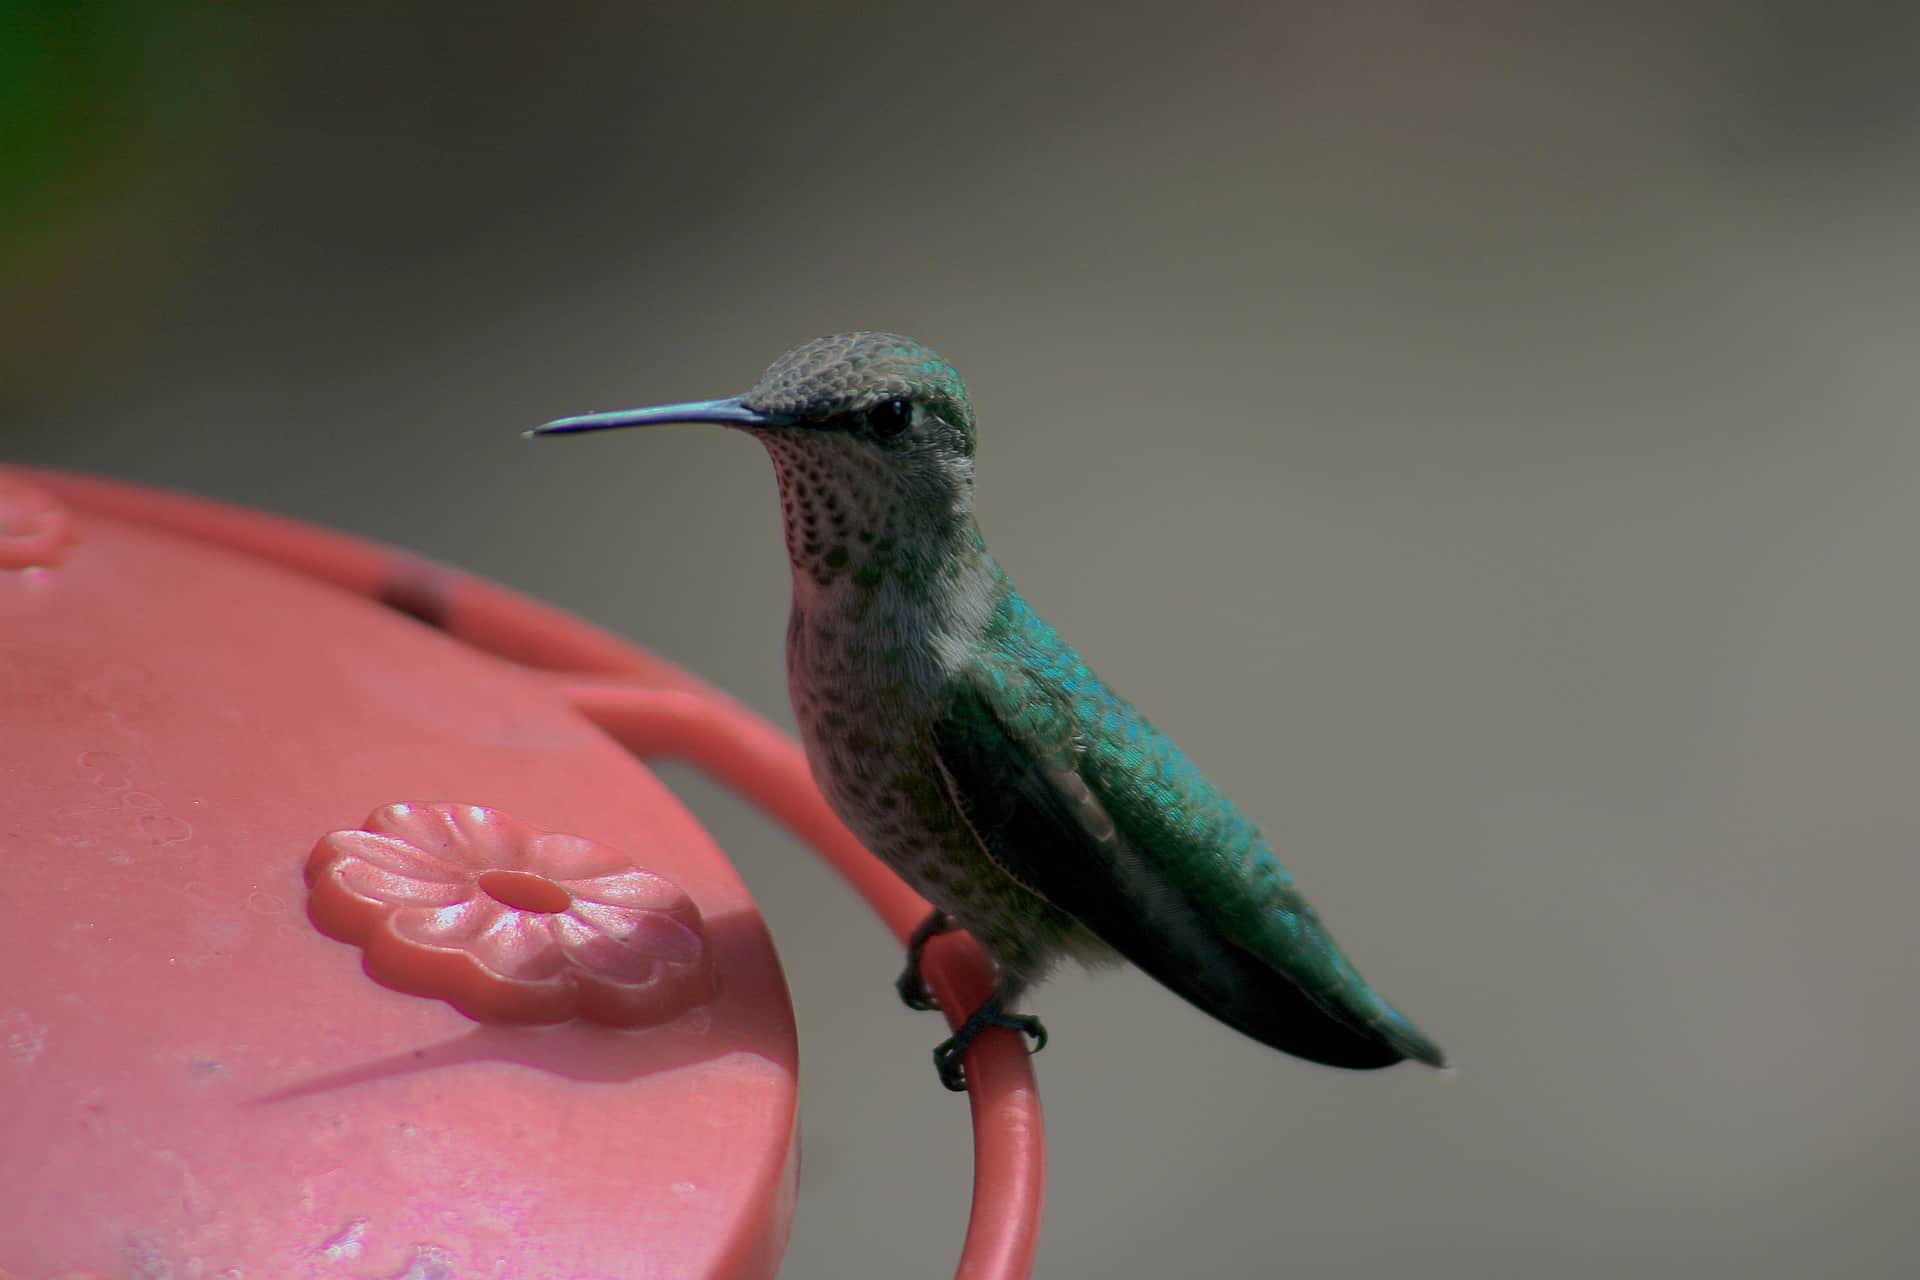 Can You keep hummingbirds as pets